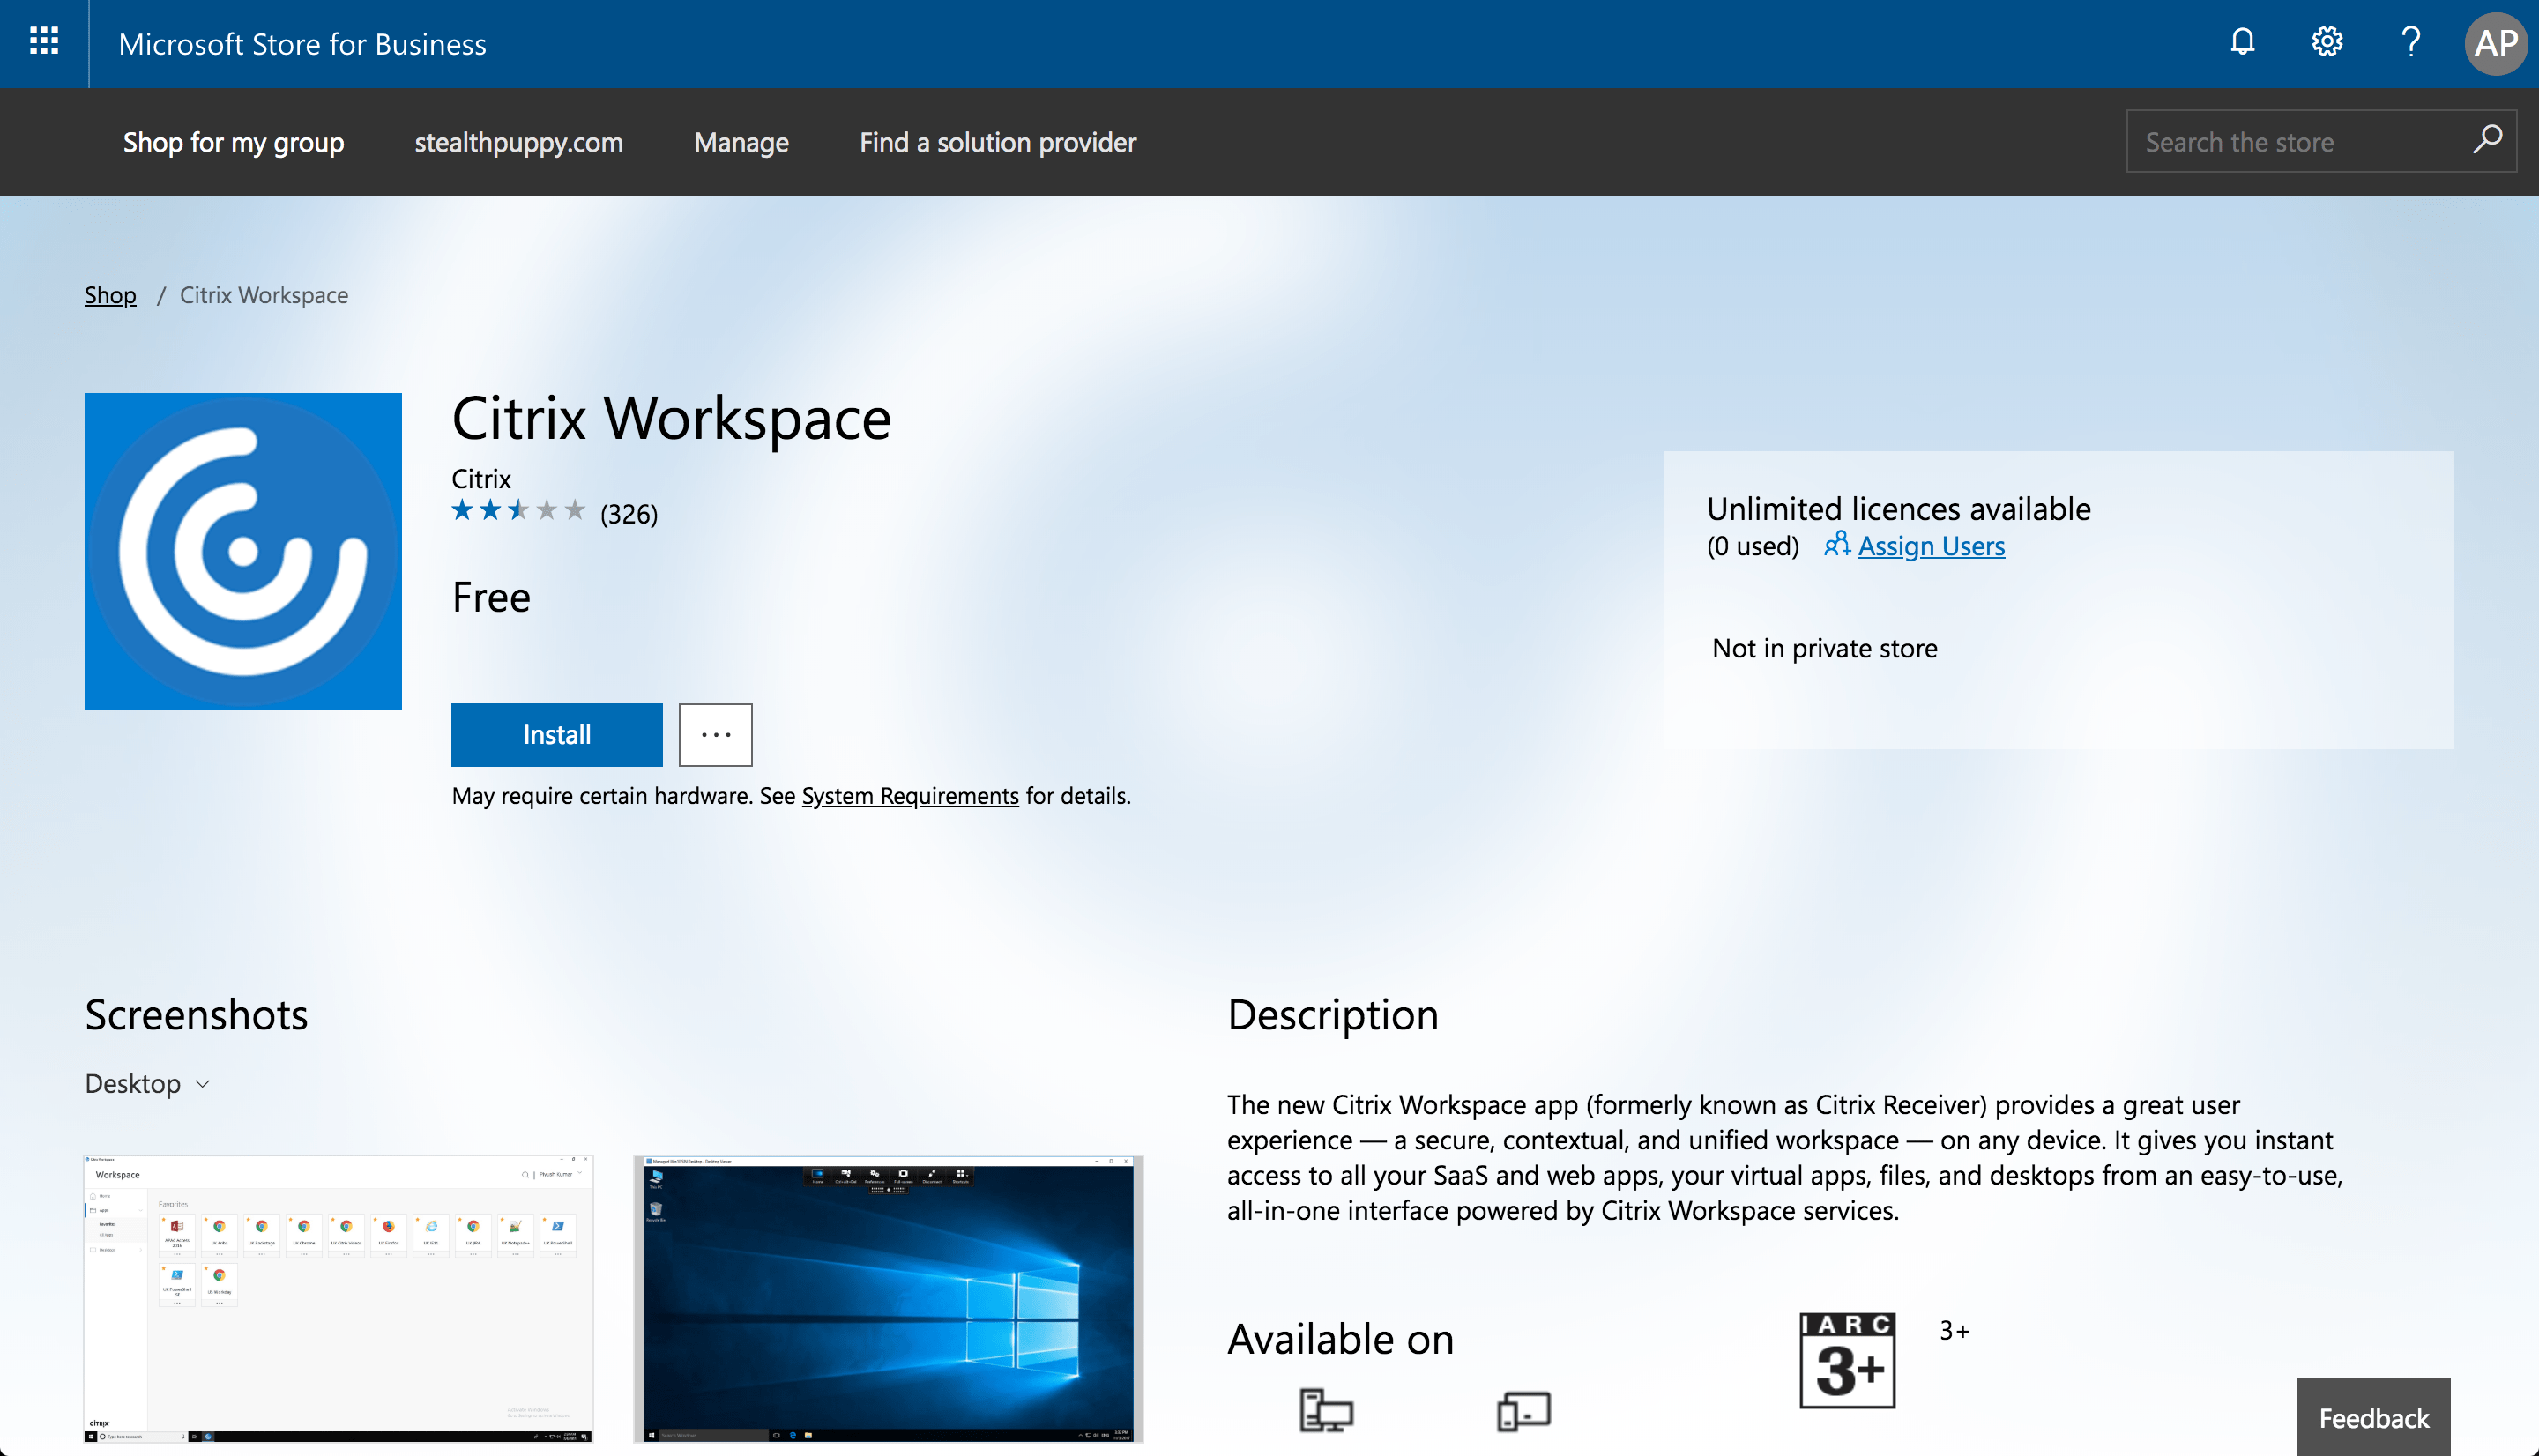 Citrix Workspace in the Microsoft Store